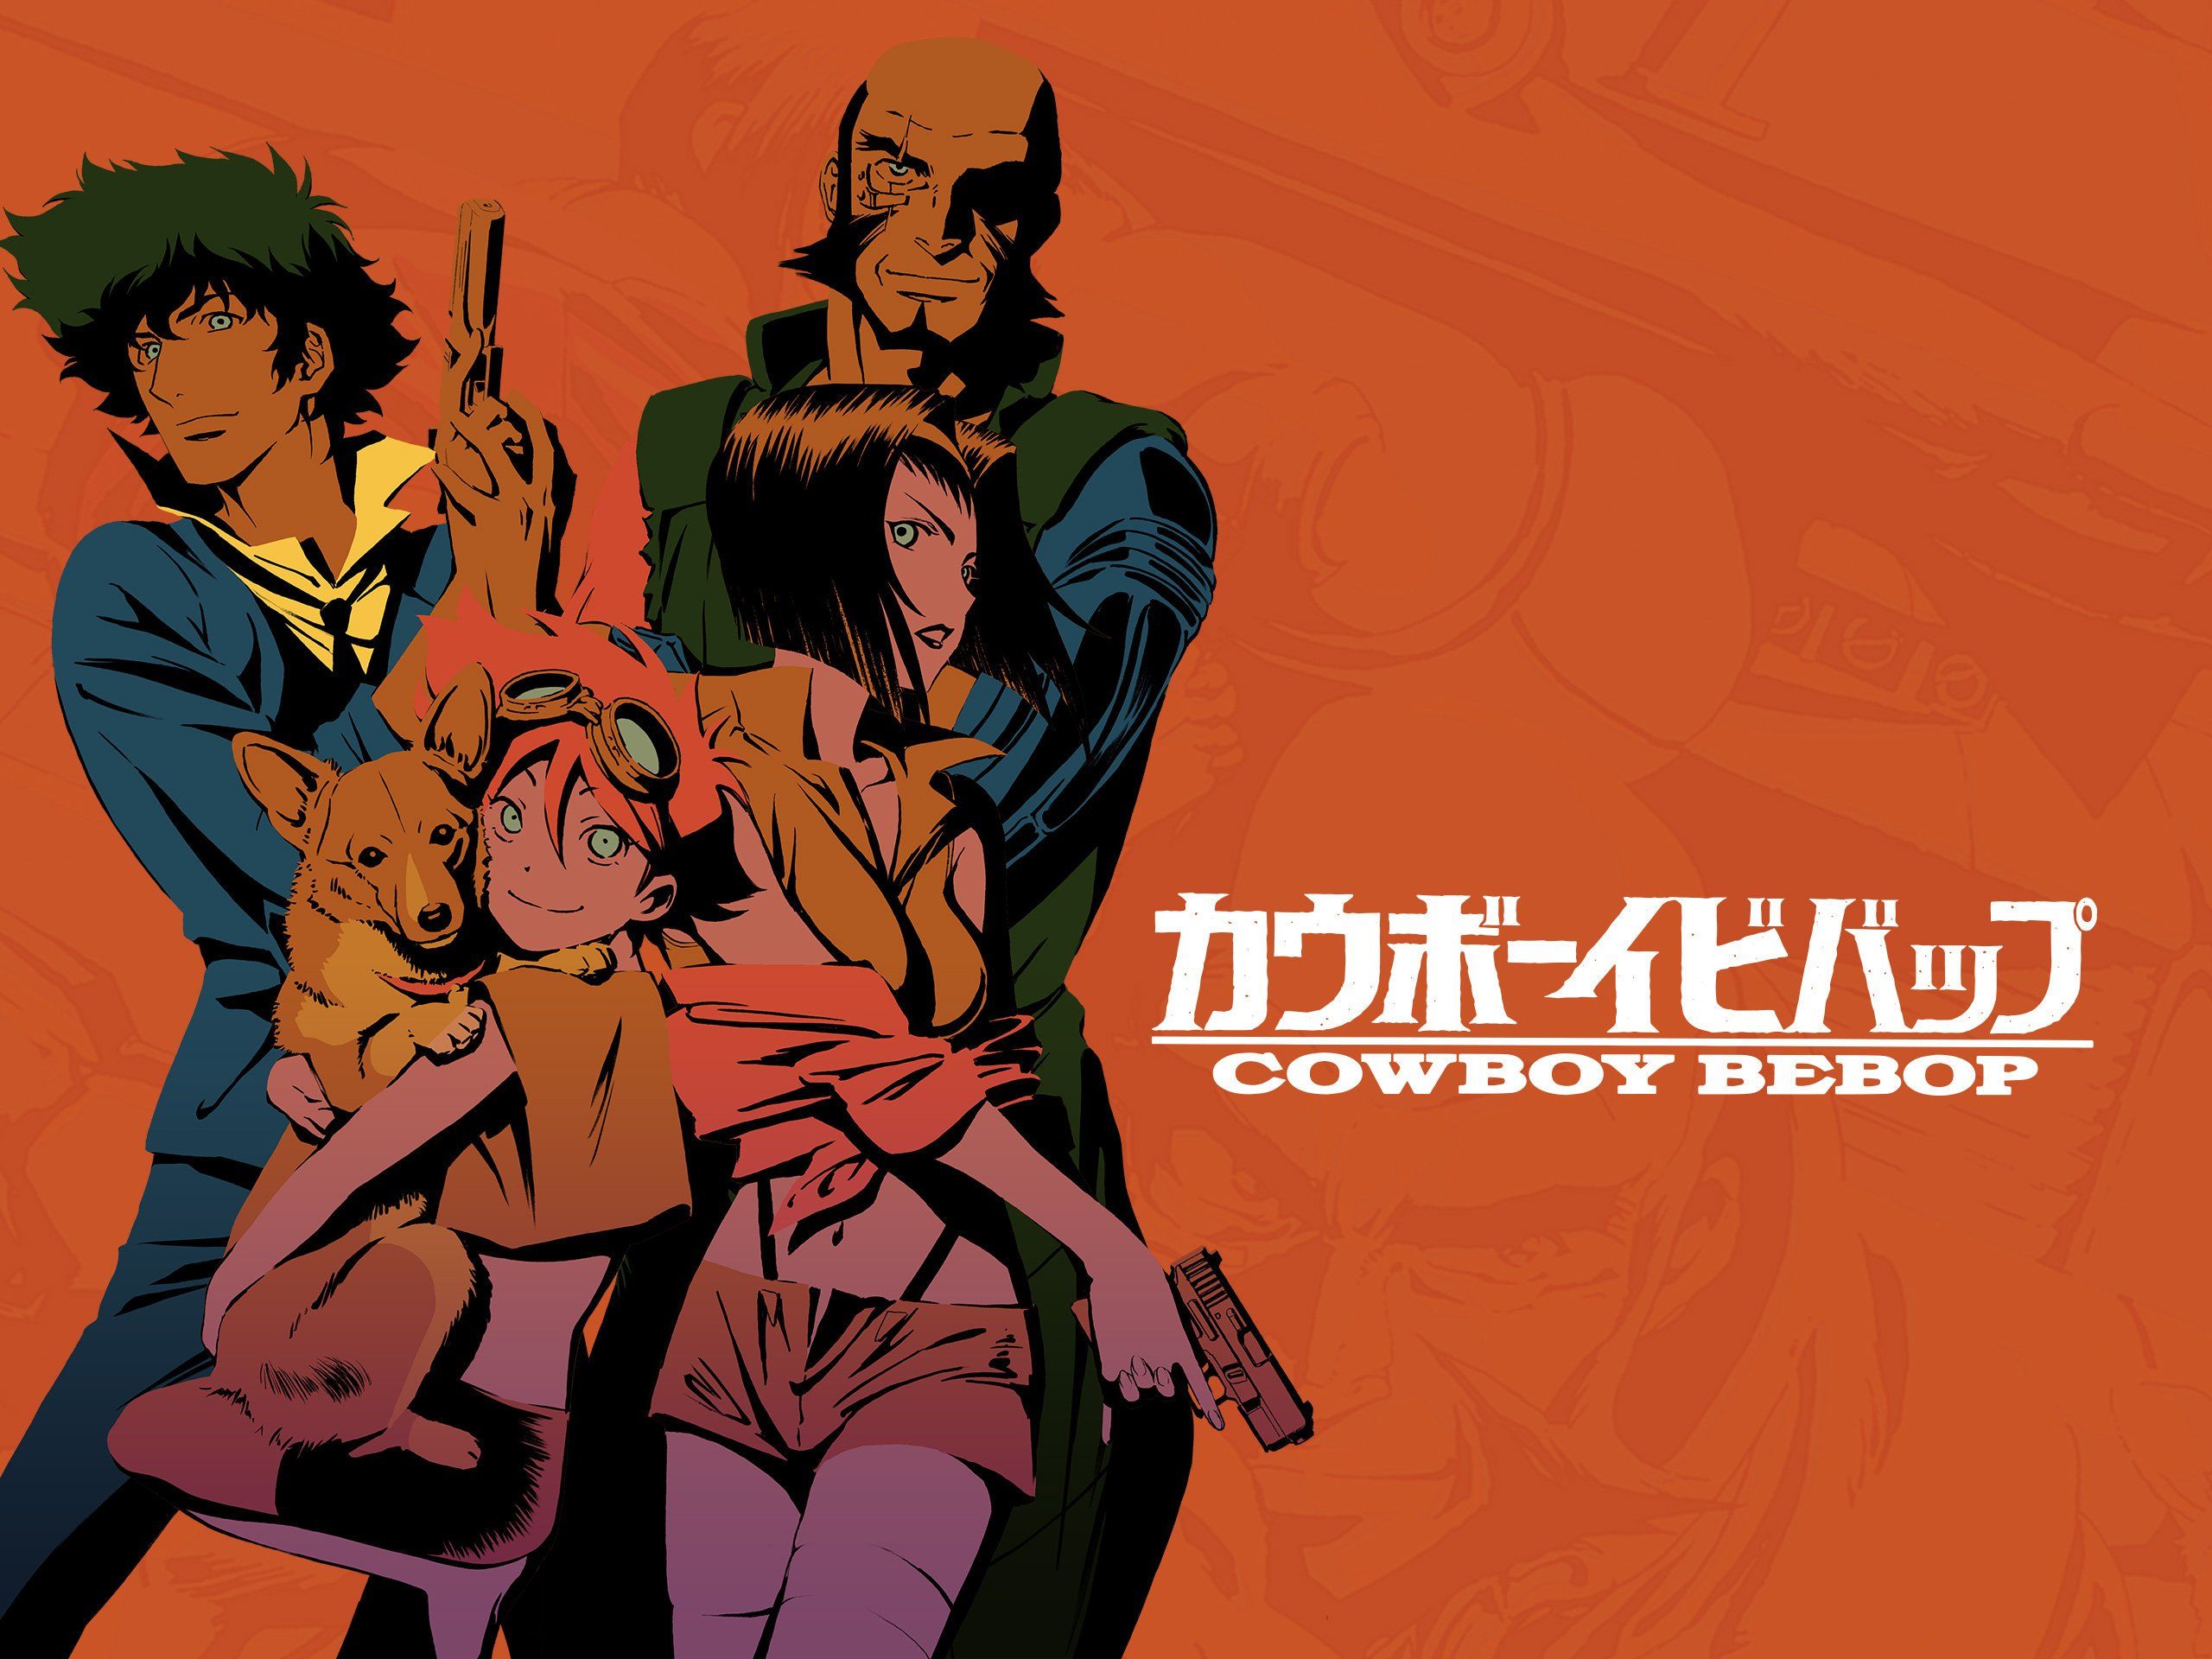 Cowboy Bebop characters collection art book / Anime | eBay-demhanvico.com.vn